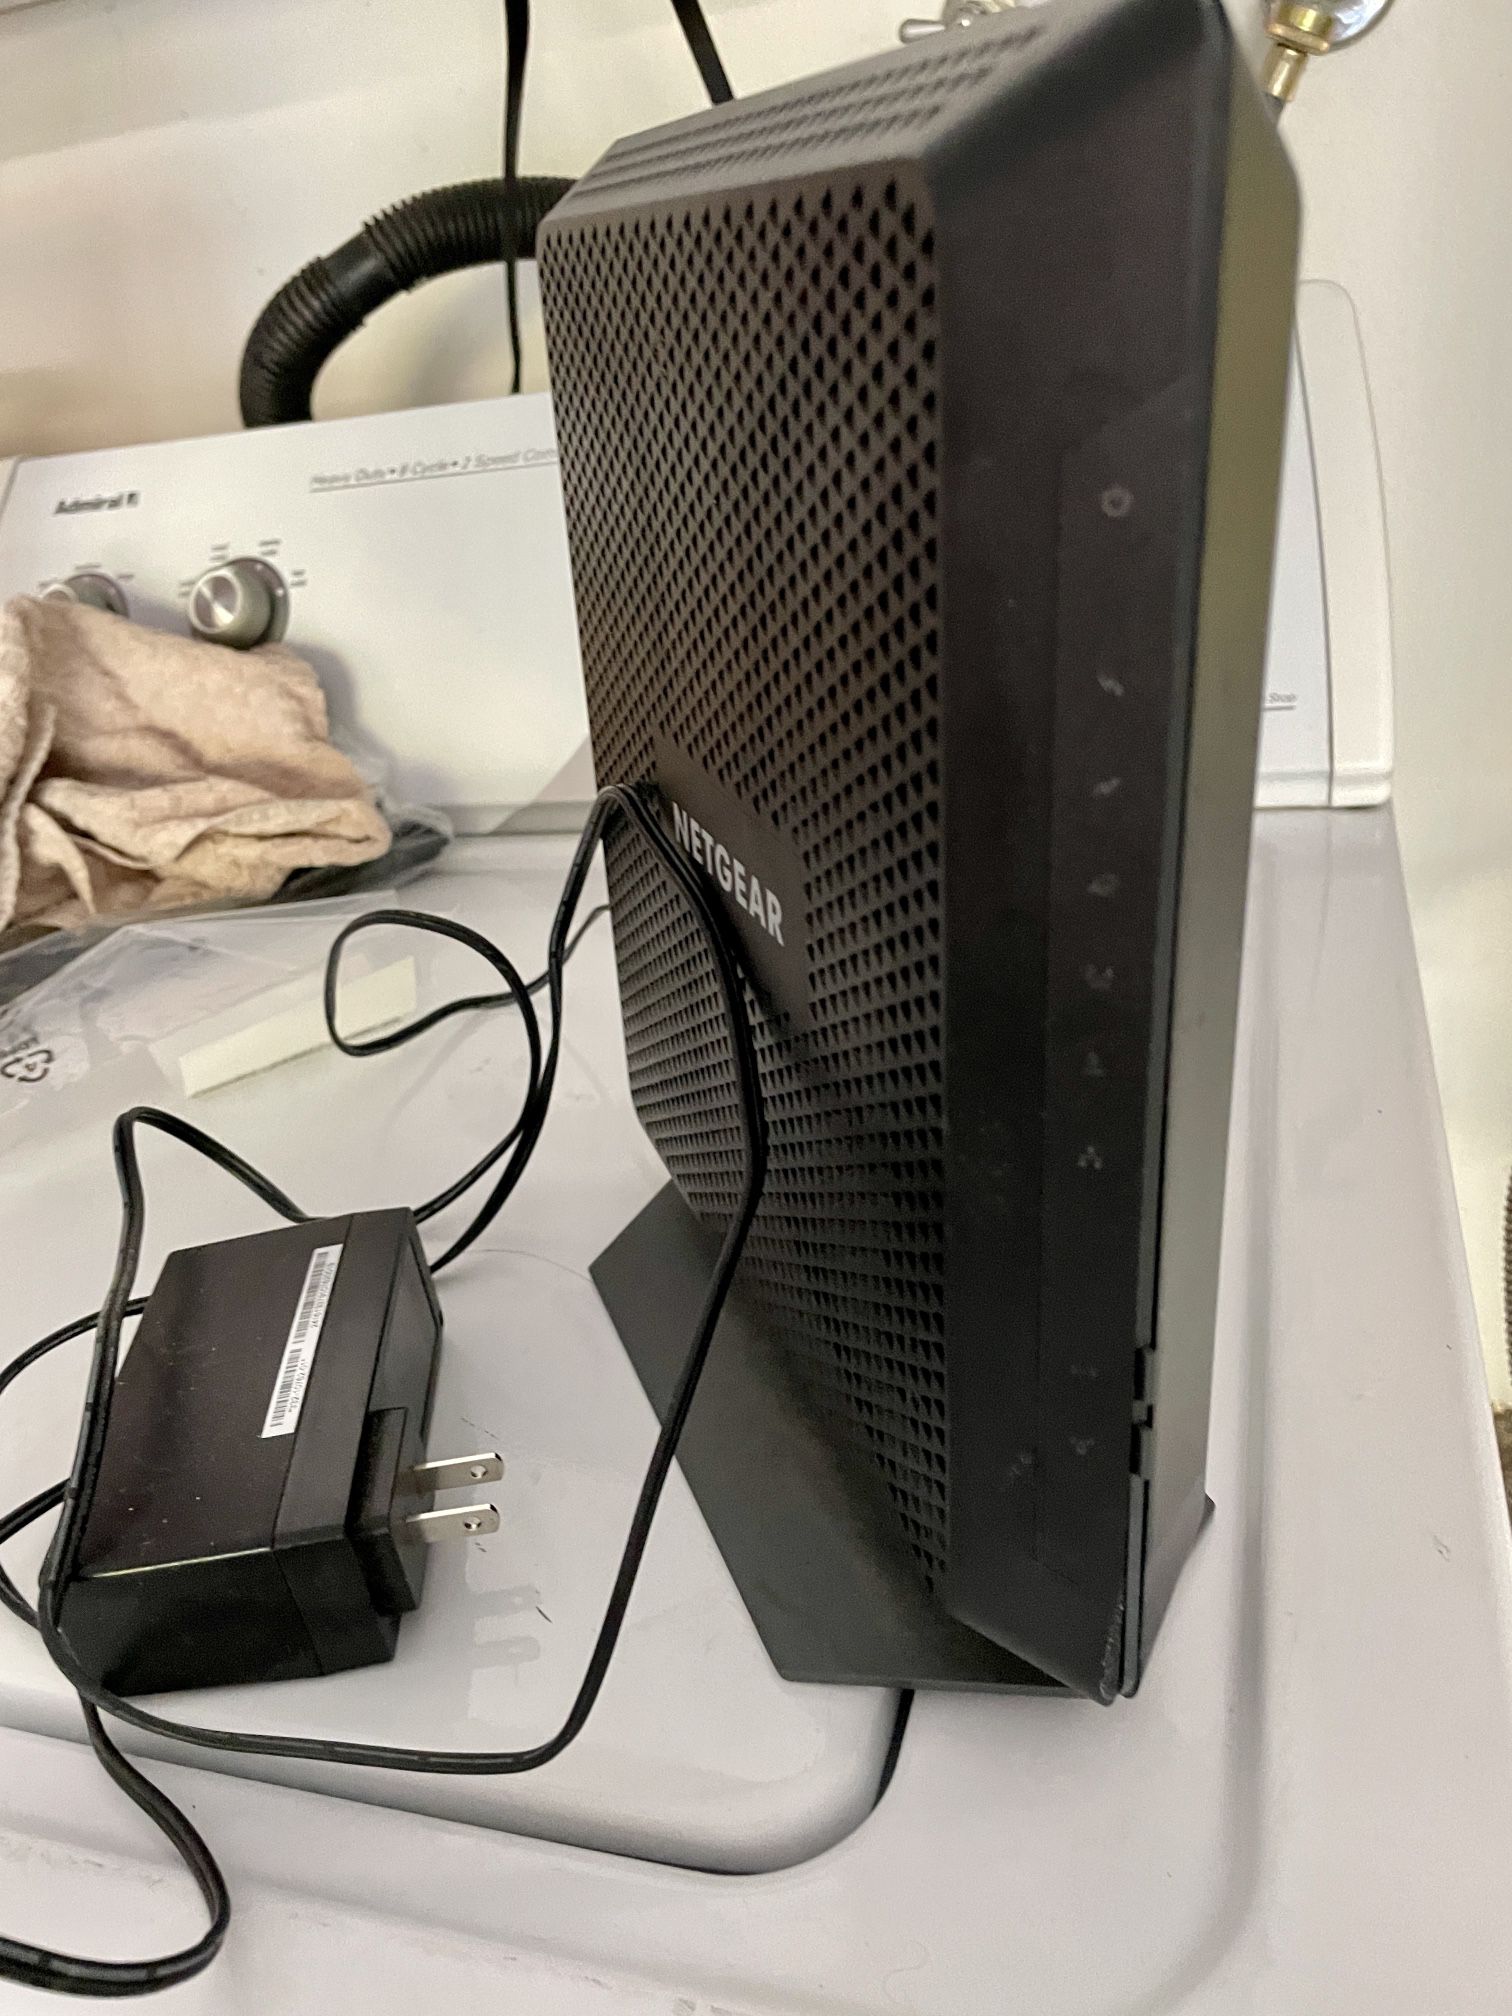 Netgear AC1900 Modem and WiFi Router 